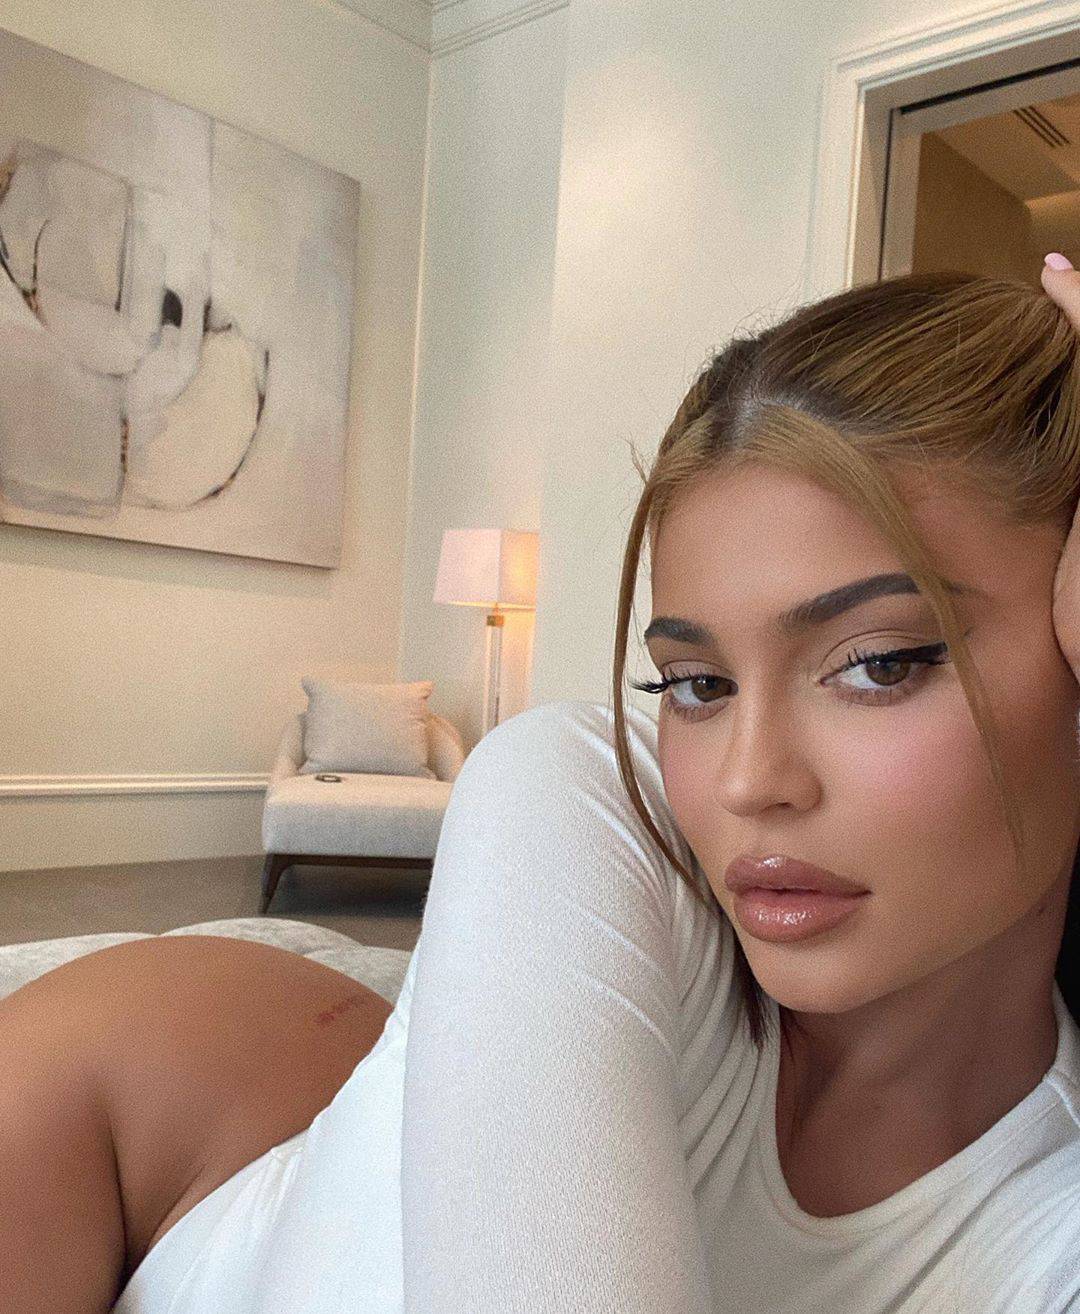 Kylie Jenner pozirala u badiću: Pokazala dekolte i trbušnjake...